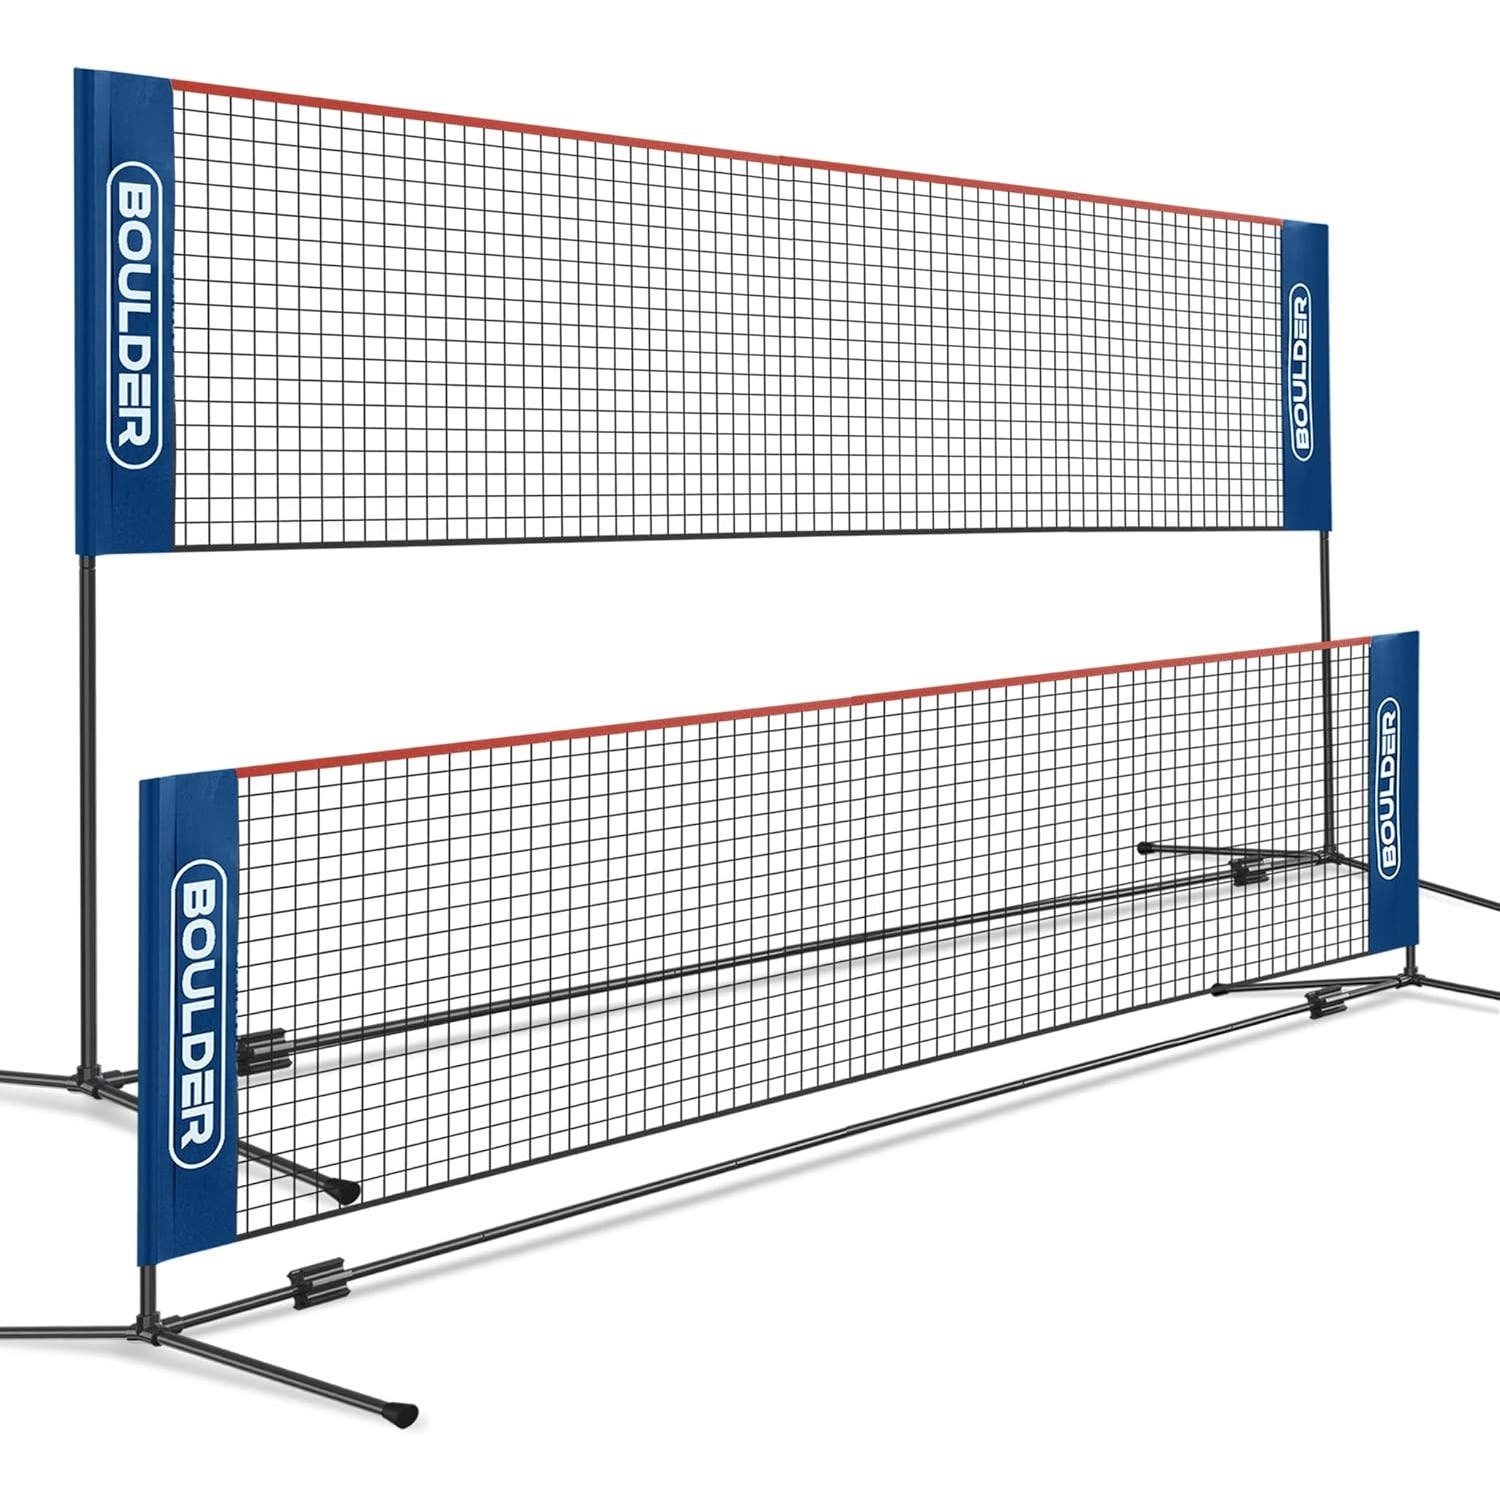 Boulder Badminton Pickleball Net - Adjustable Portable 